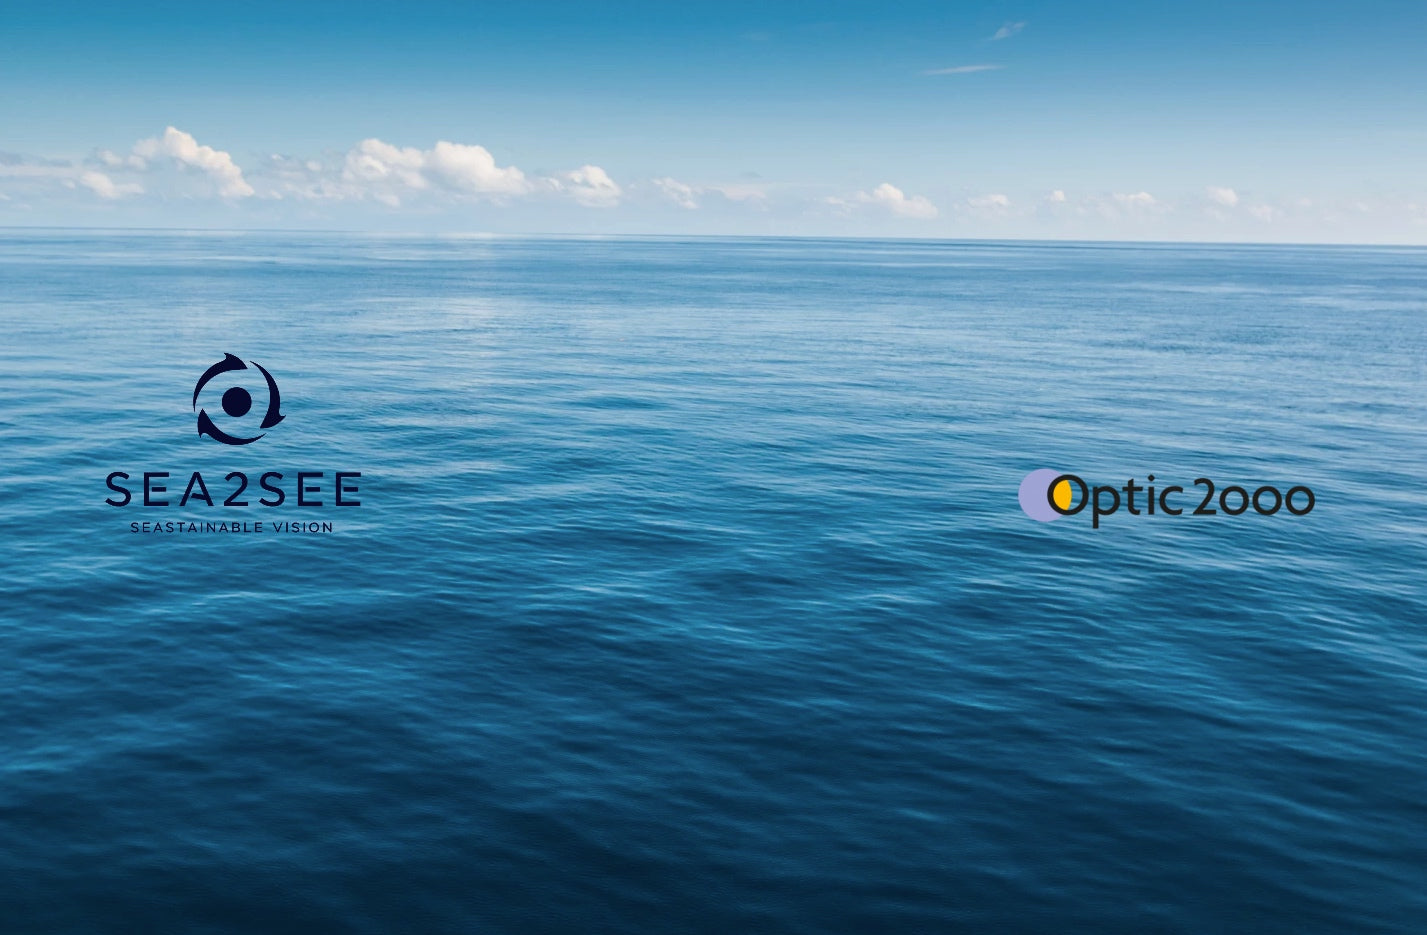 Sea2see Optic2000 collaboration